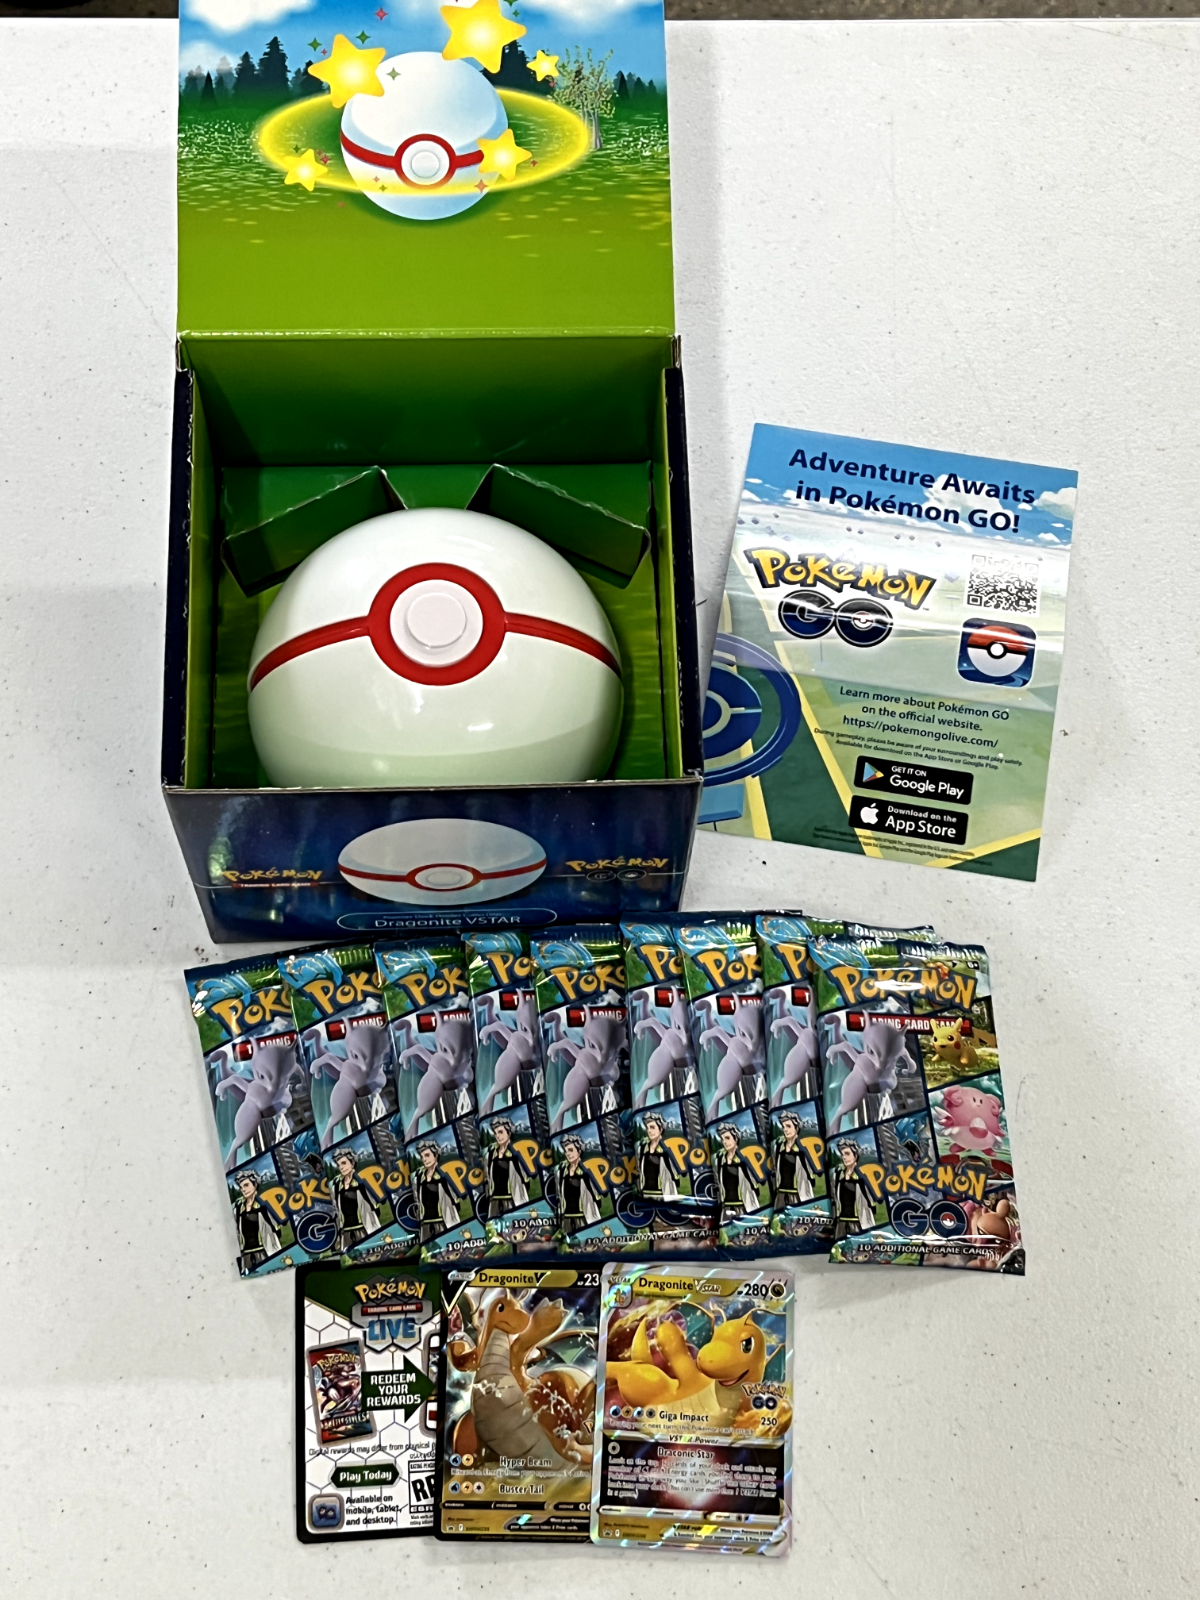  Pokémon TCG: Pokémon GO Premier Deck Holder  Collection—Dragonite VSTAR : Toys & Games